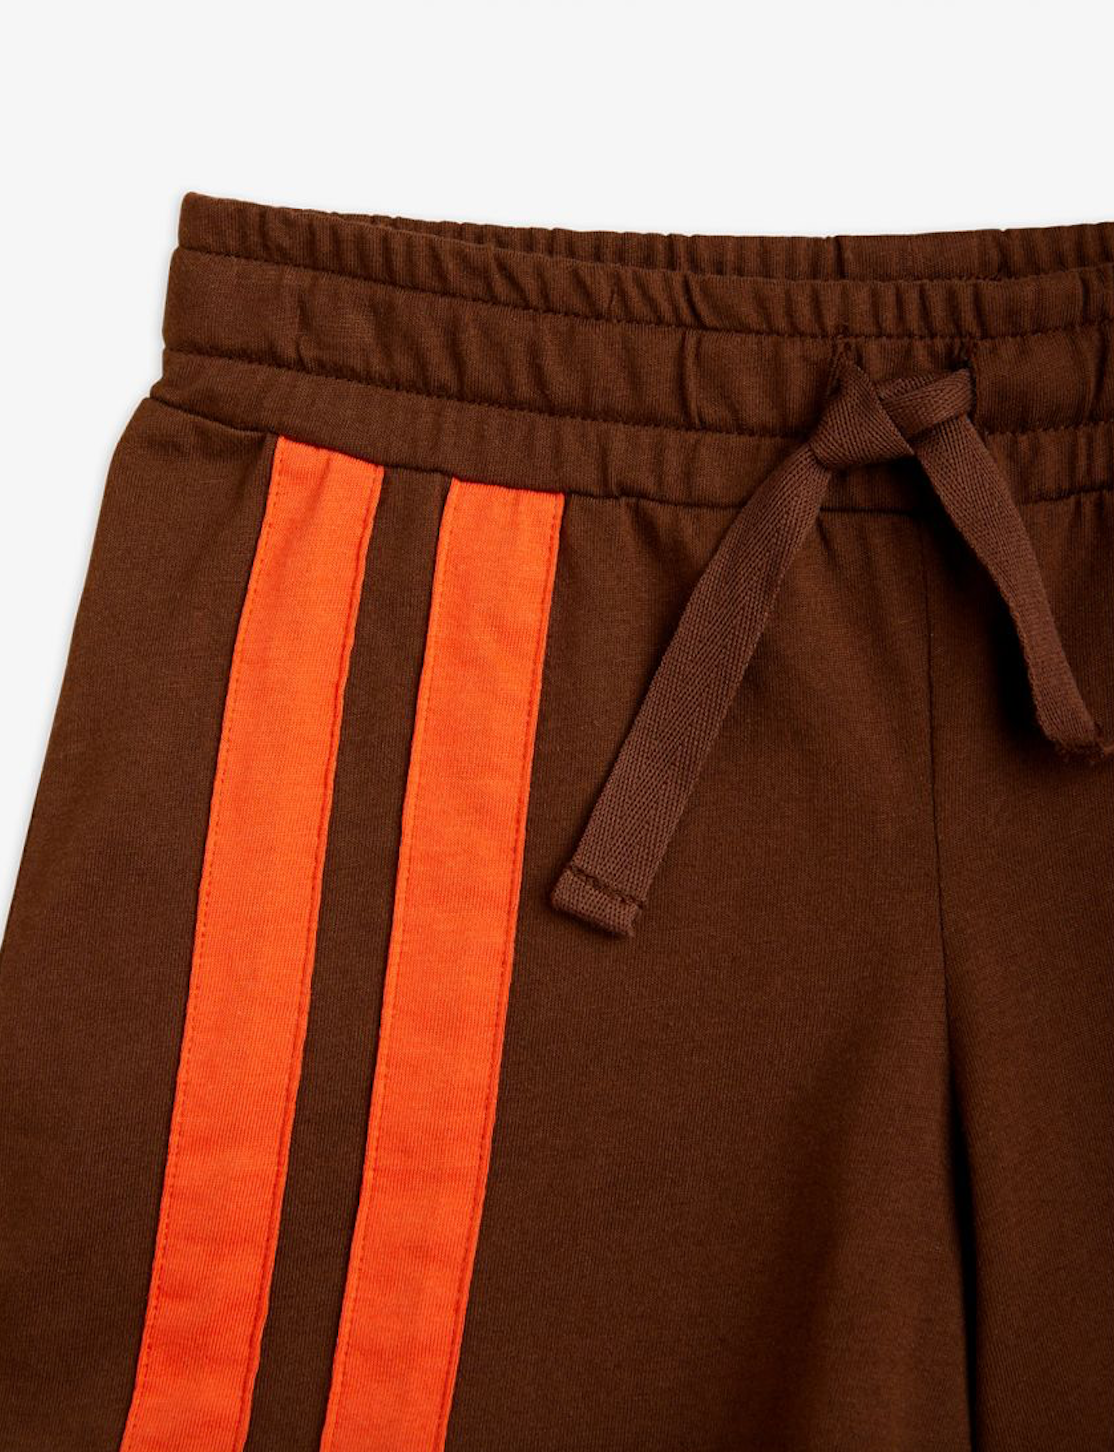 Panel Stripe Shorts